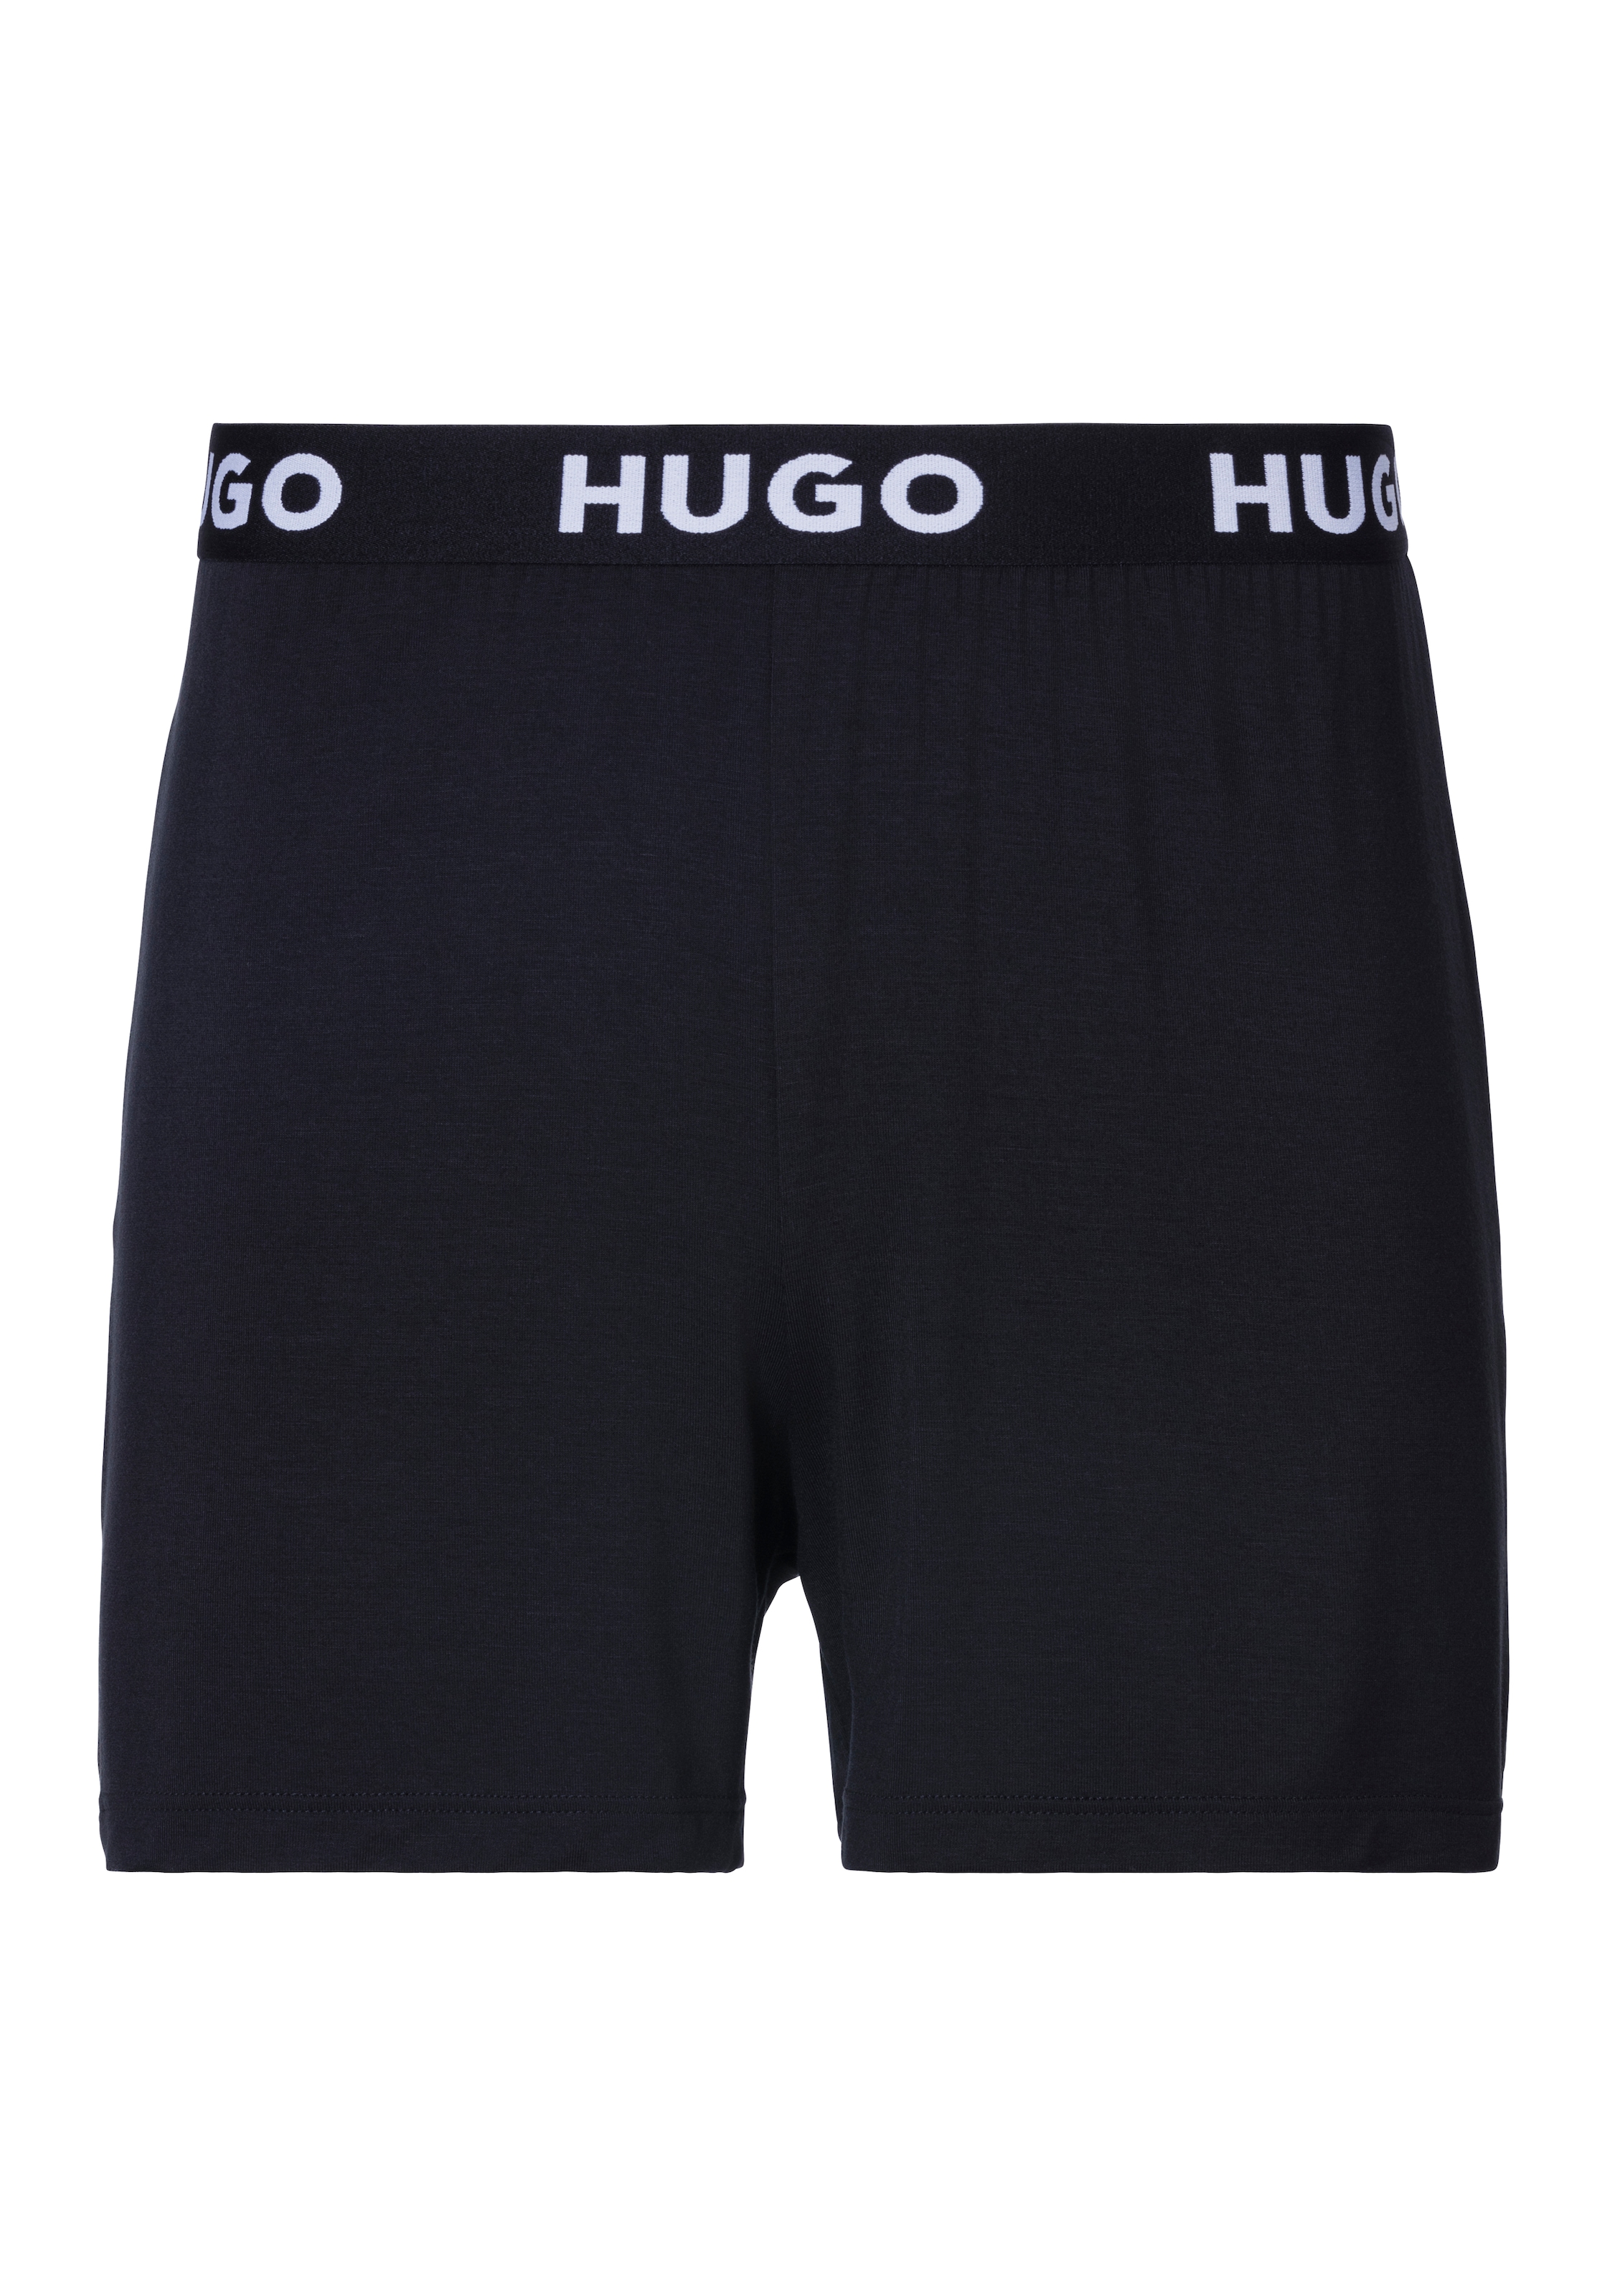 HUGO Underwear Schlafshorts »UNITE_SHORTS 10247048 01«, mit Hugo Logo-Elastiktape am Bund